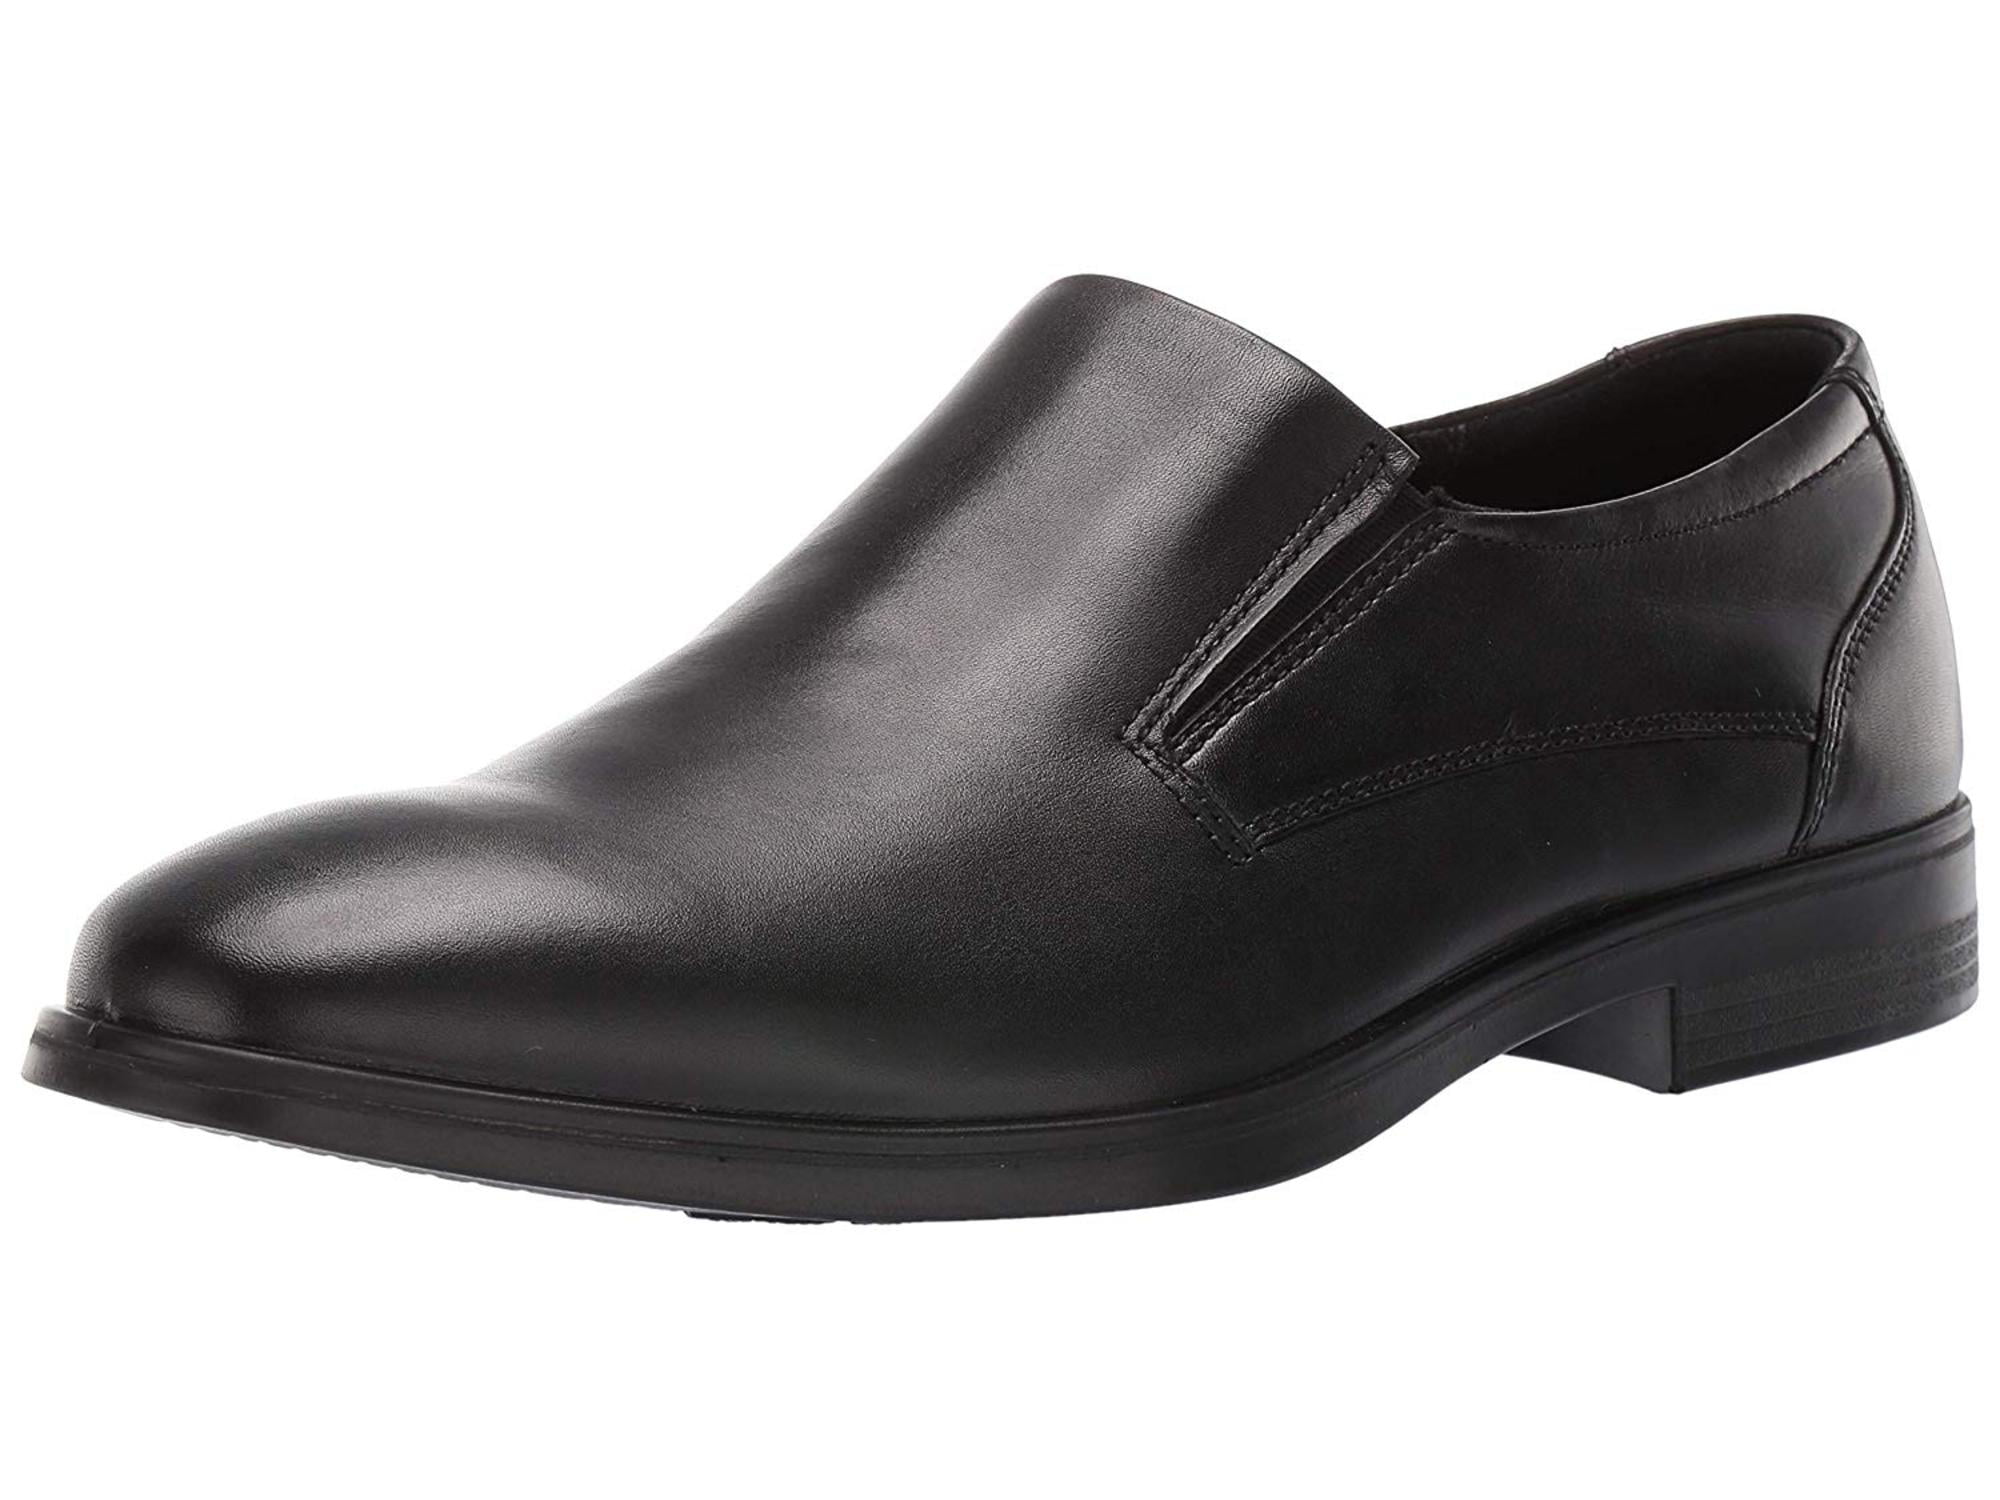 ECCO - ECCO Men's Melbourne Plain Toe Slip on Loafer, Black, Size 11.0 ...